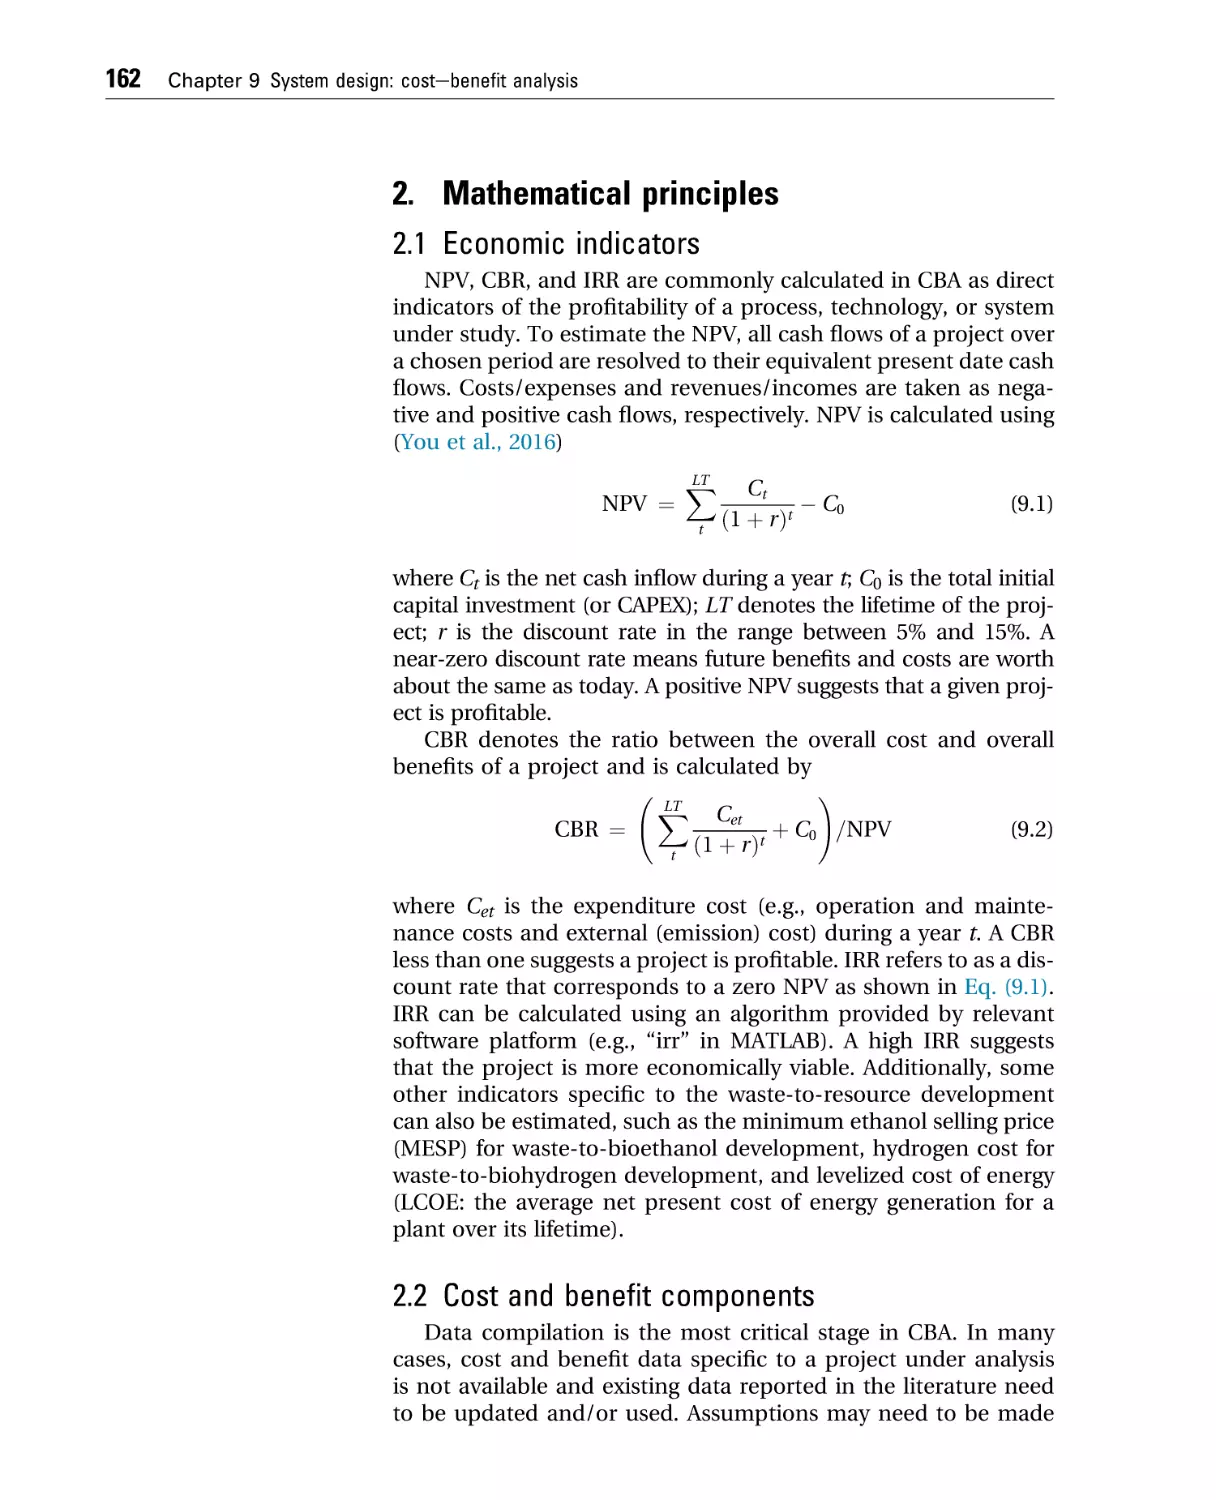 2. Mathematical principles
2.1 Economic indicators
2.2 Cost and benefit components